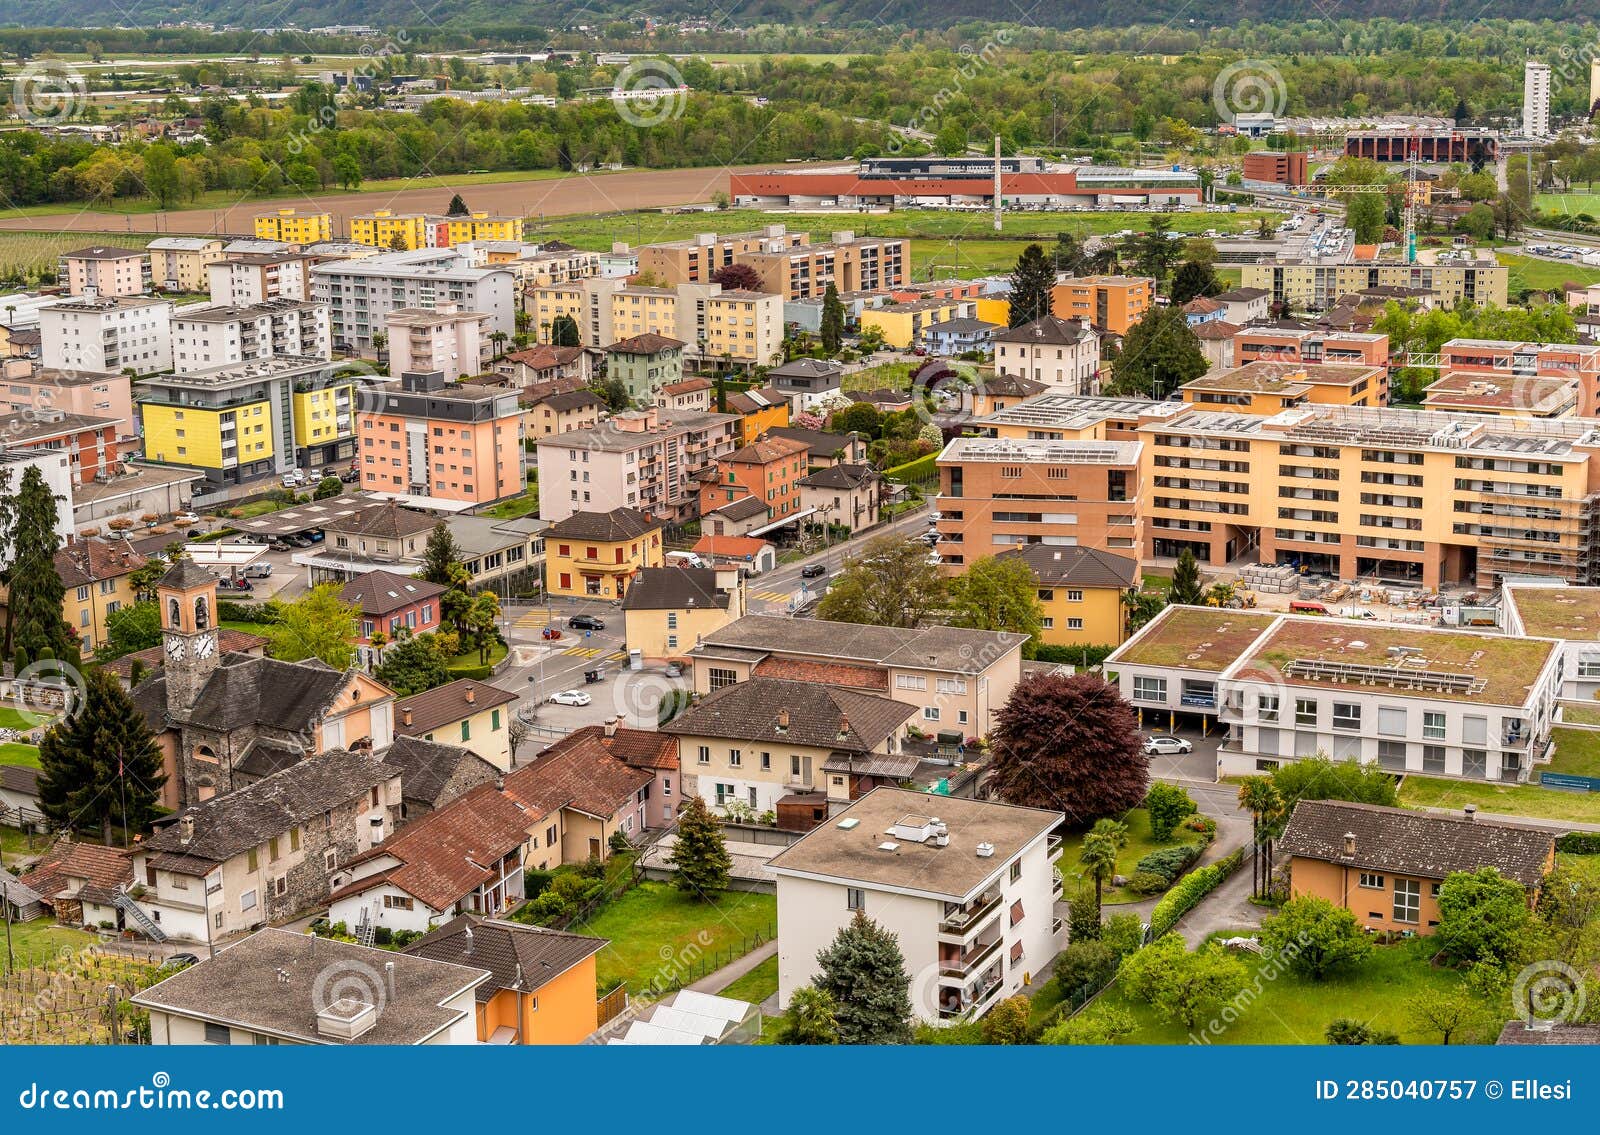 top view of the tenero village, in the district of locarno, ticino, switzerland.